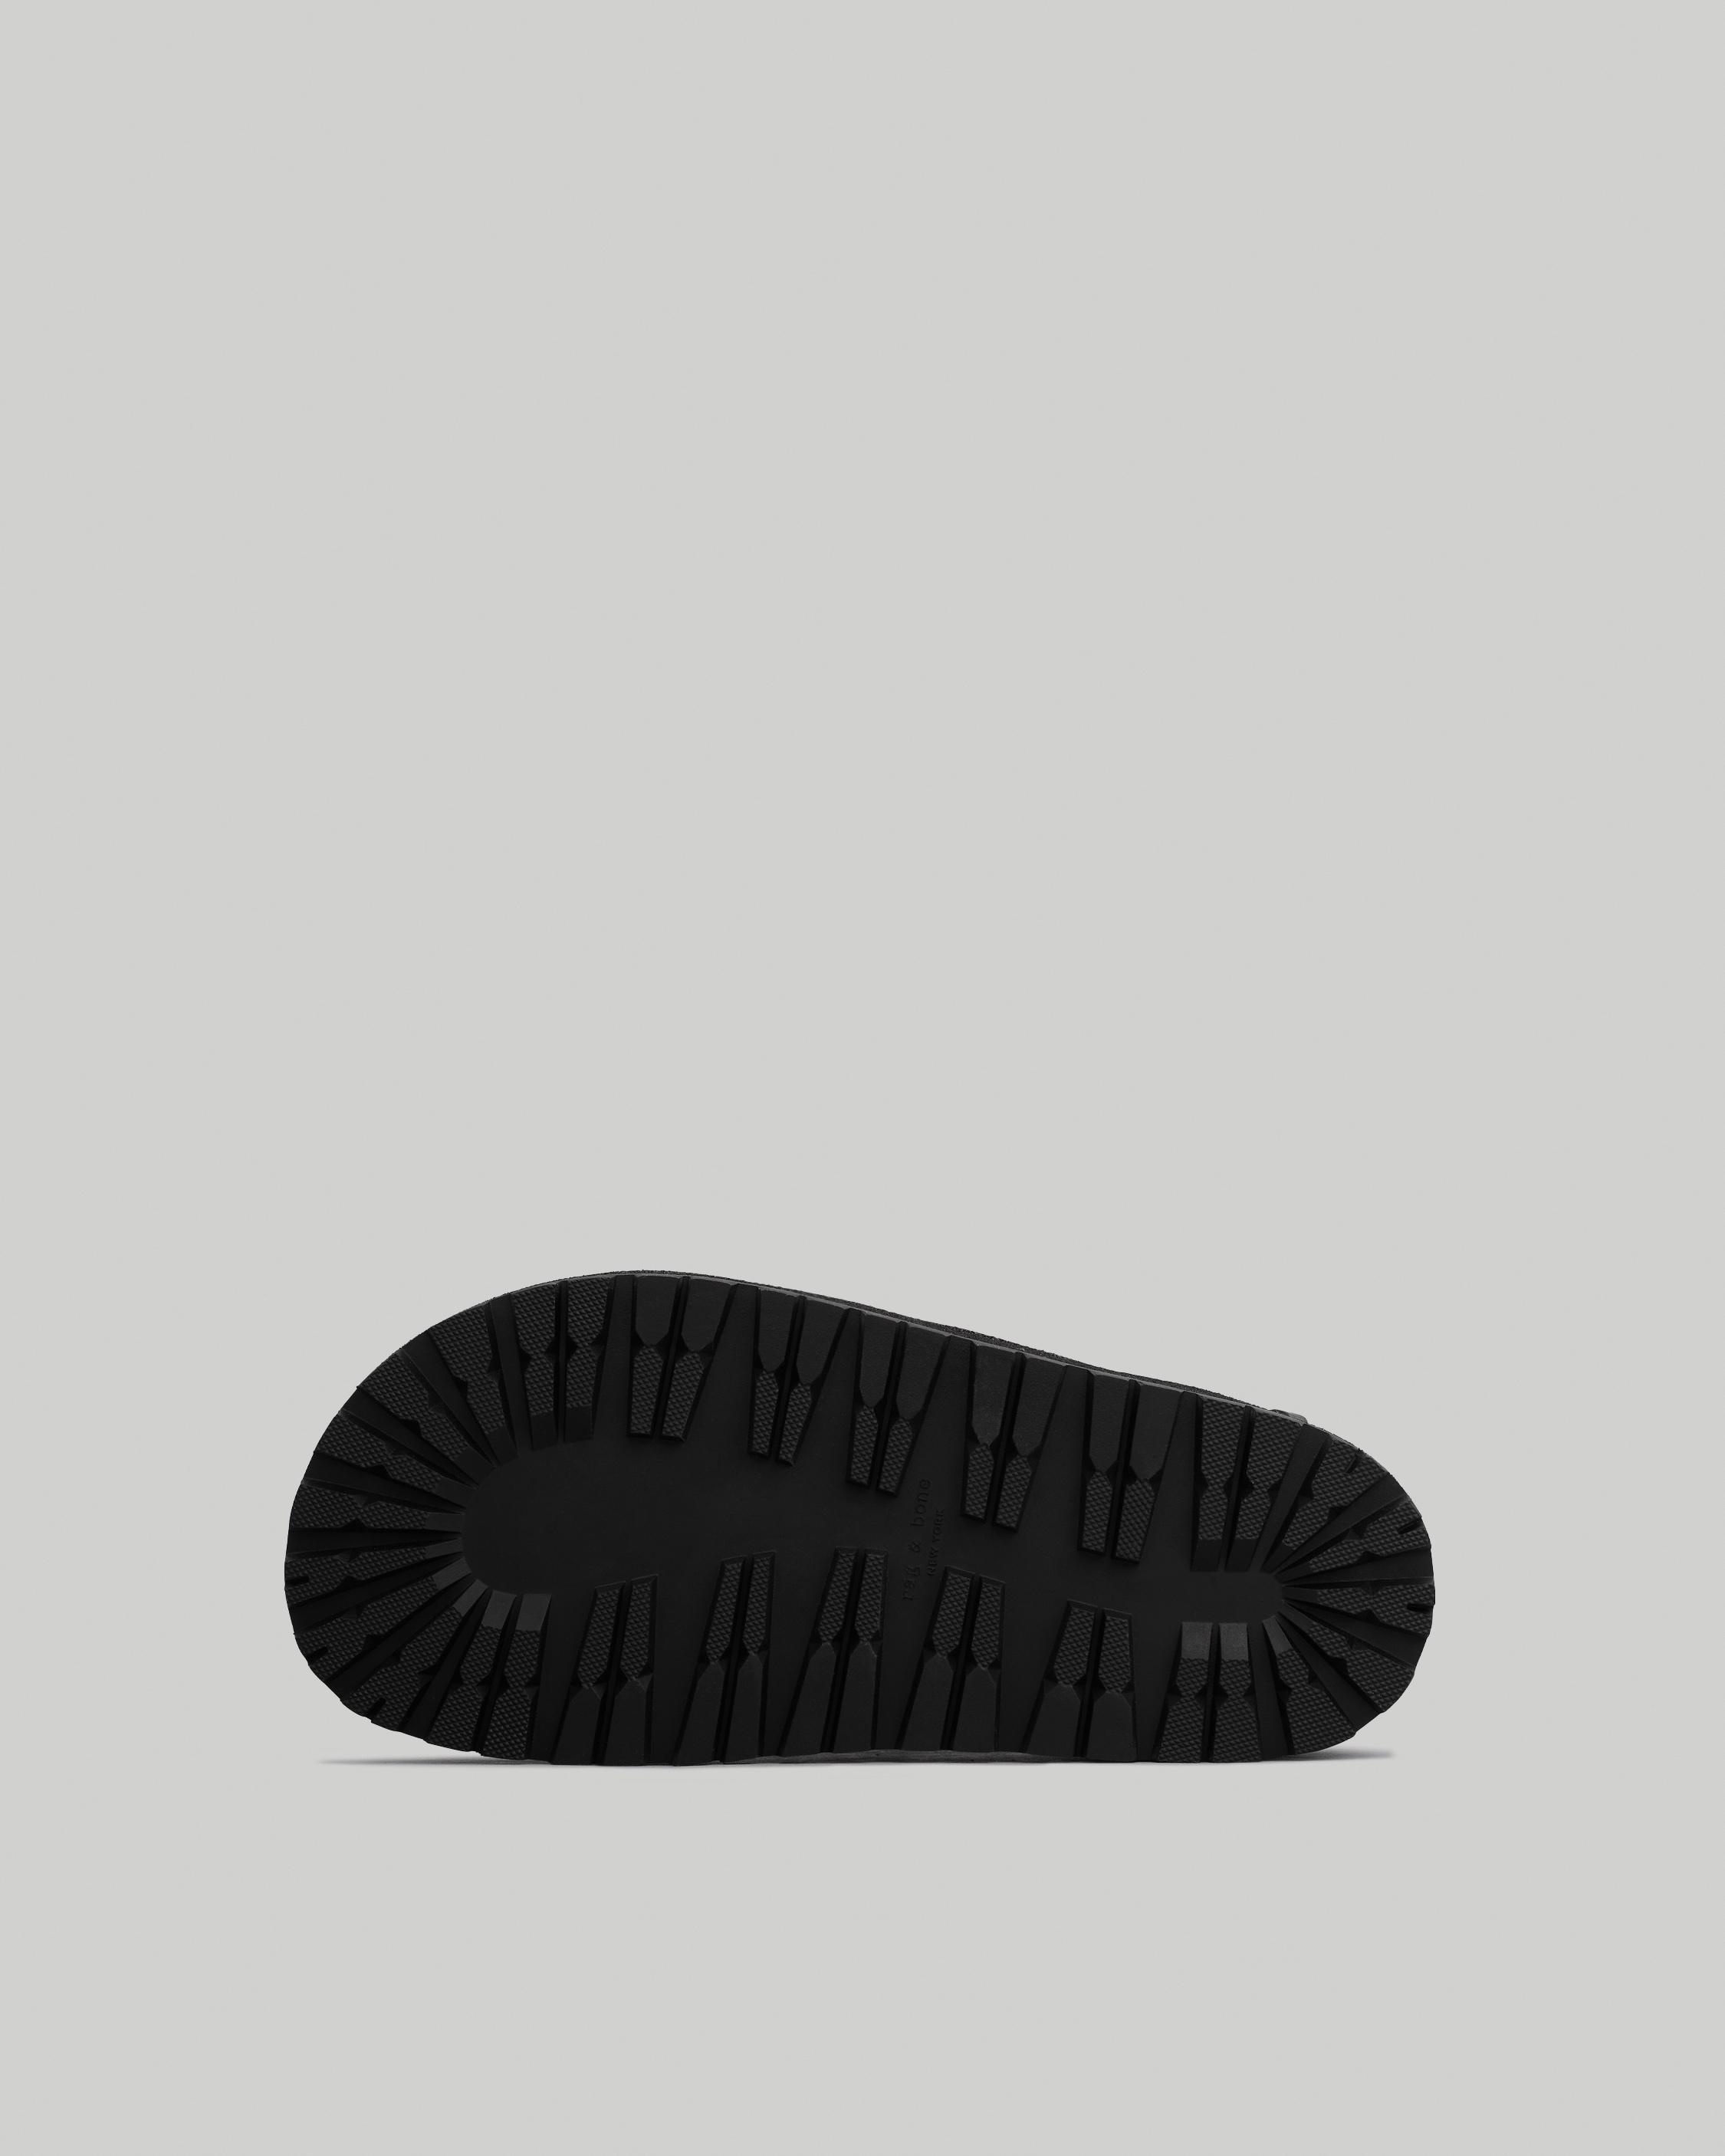 Park Sandal - Nylon
Flatform Sandal - 5